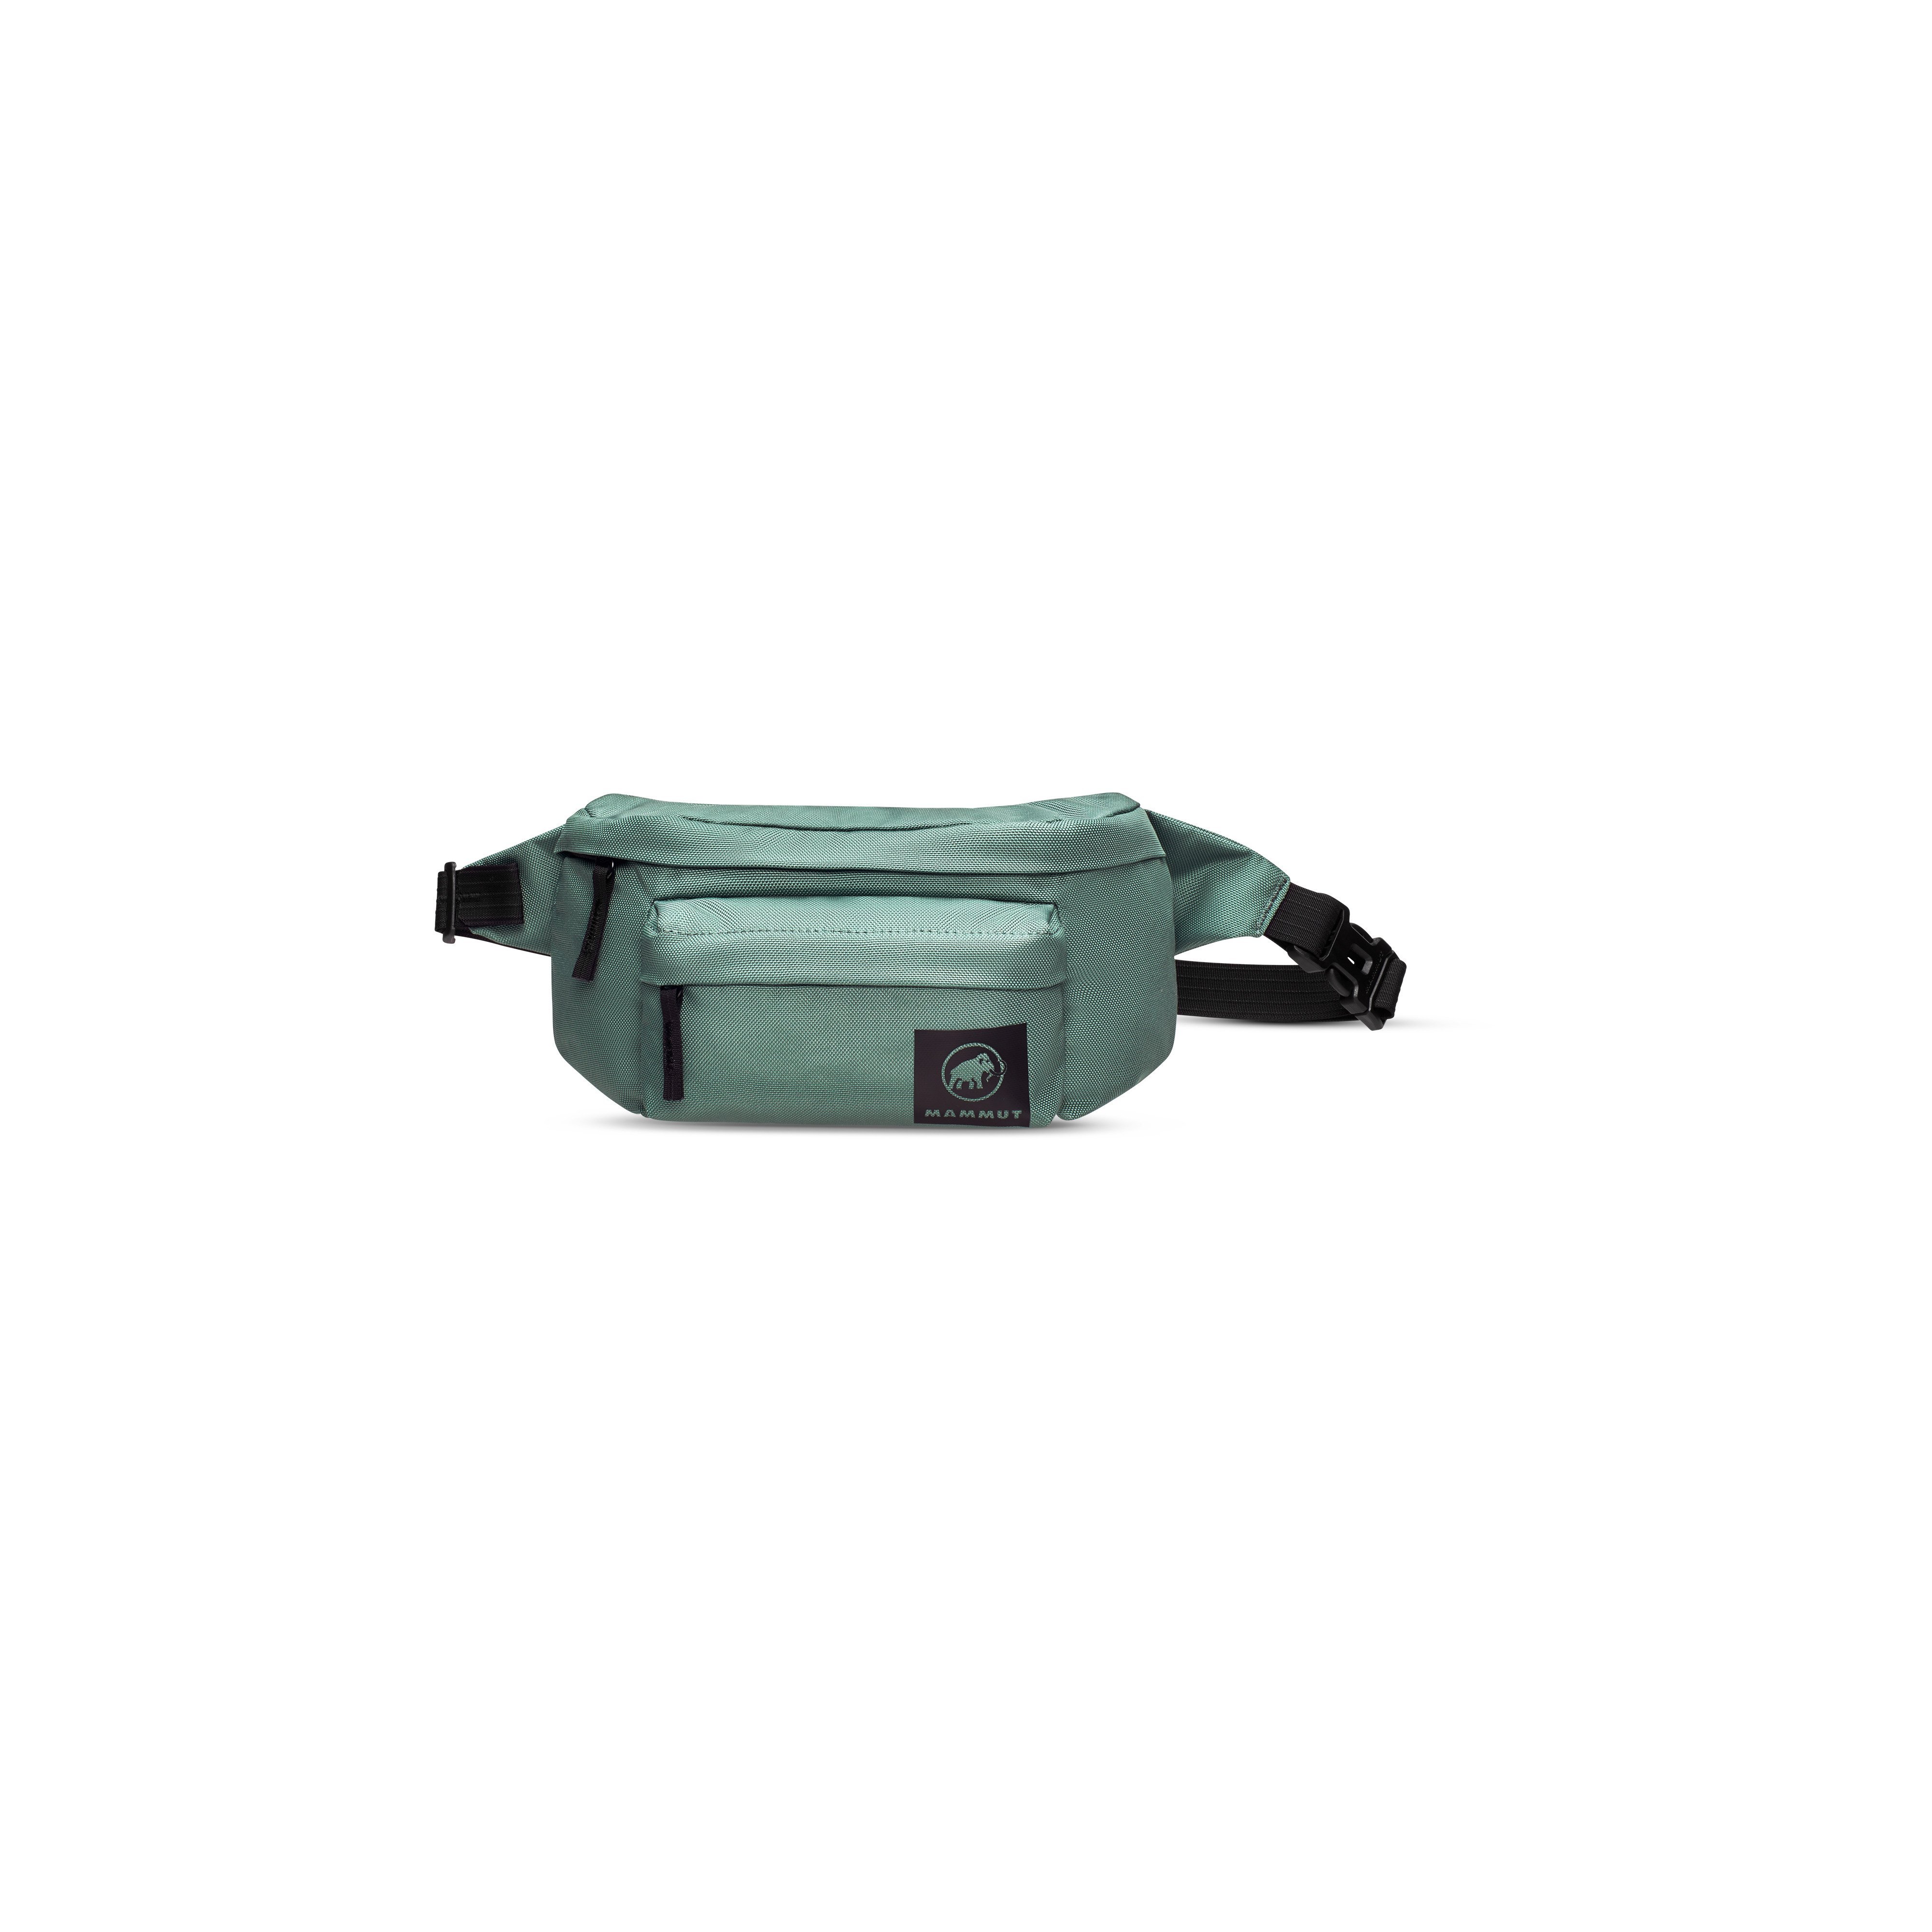 Xeron Neuveville Waistpack - dark jade, 2 L product image